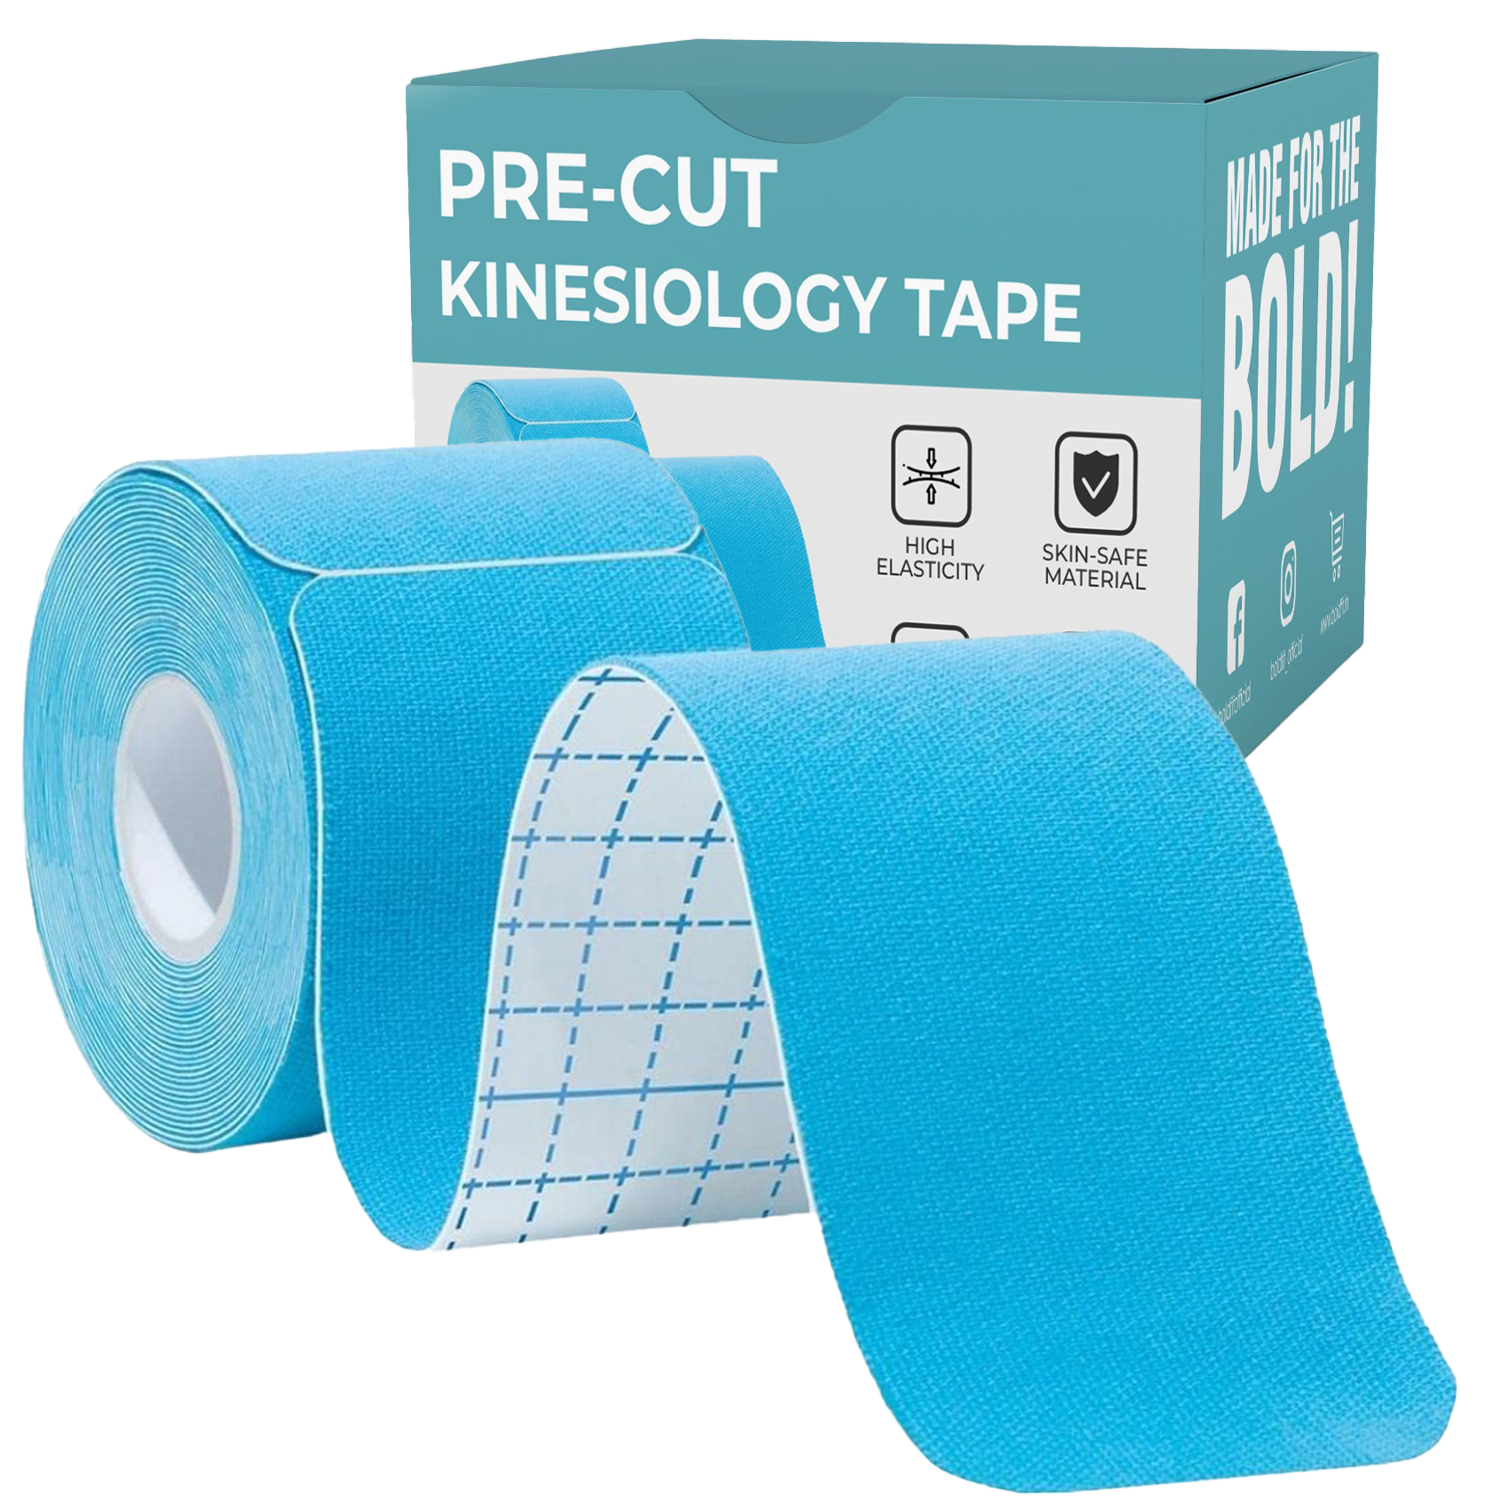 Kintape Cotton Plain Kineisology Tape Sports Tape Precut